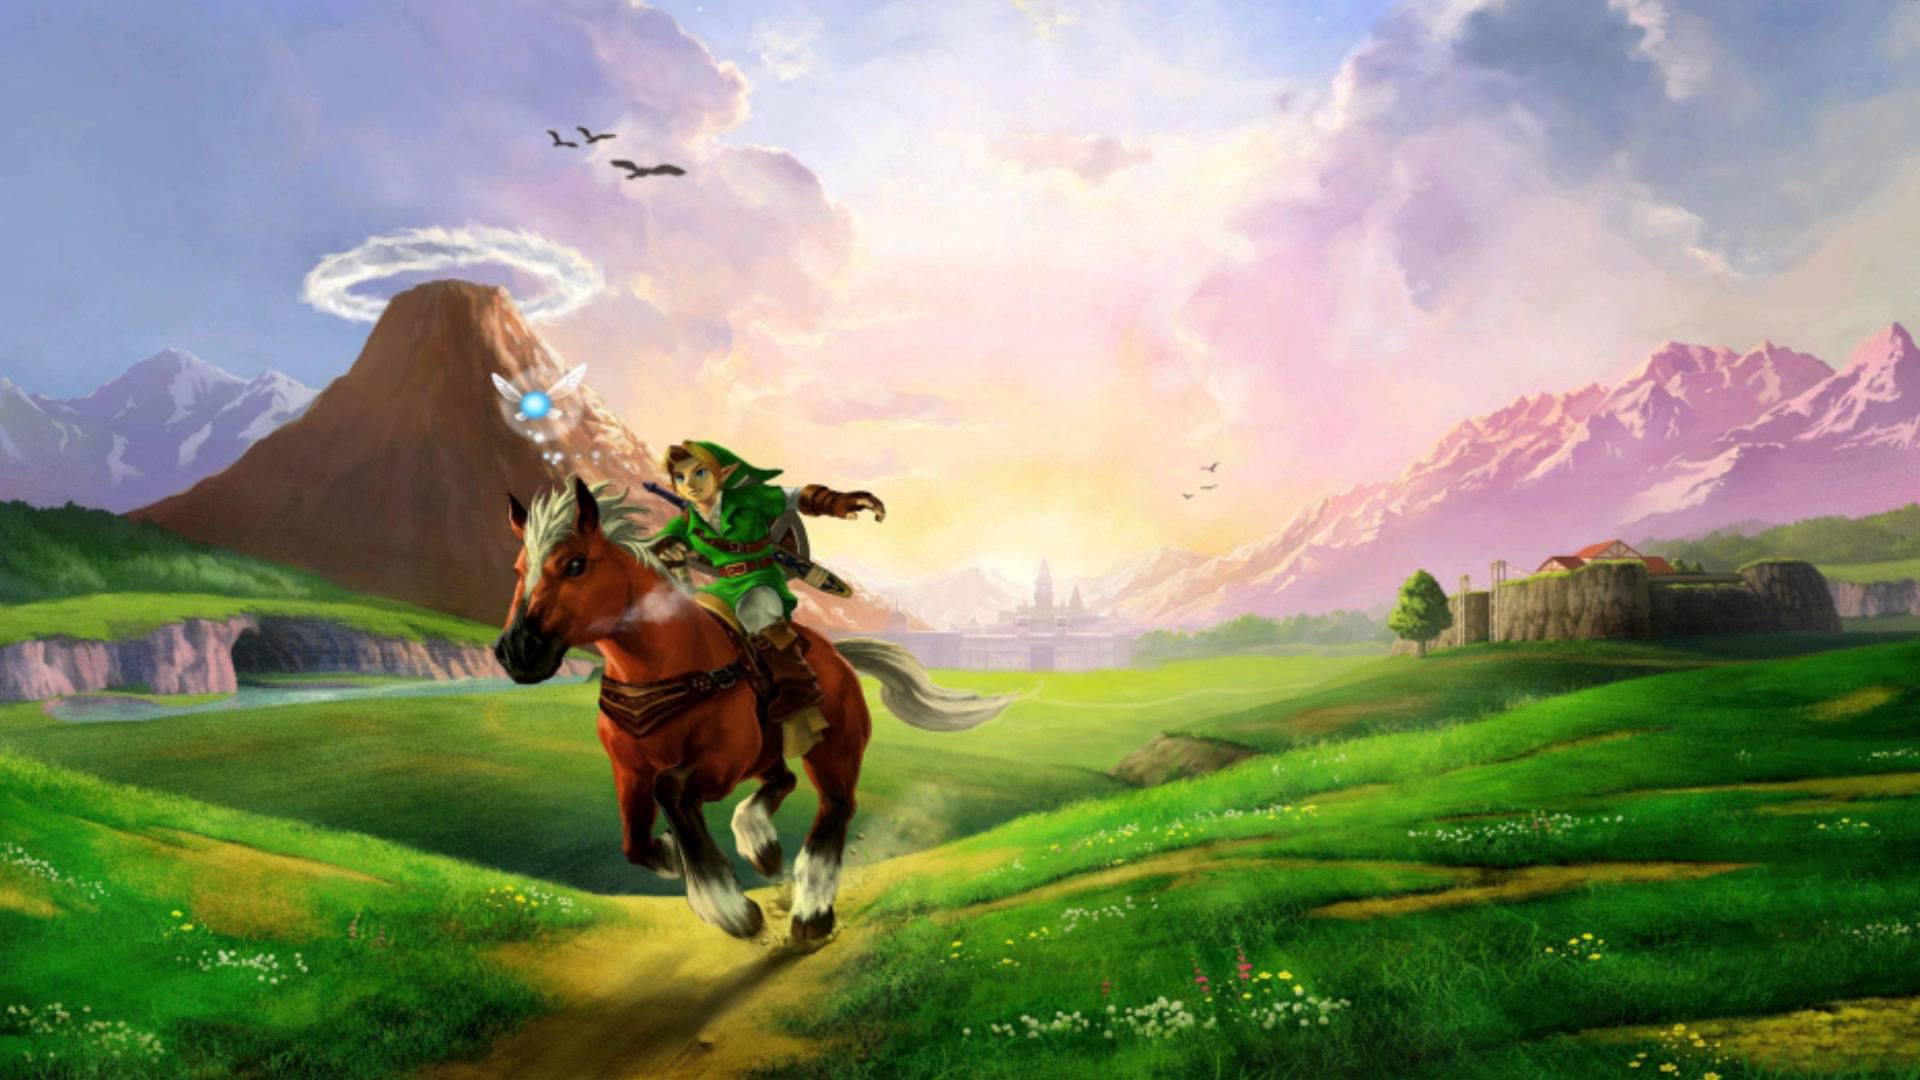 The Legend Of Zelda: Ocarina Of Time Backgrounds on Wallpapers Vista